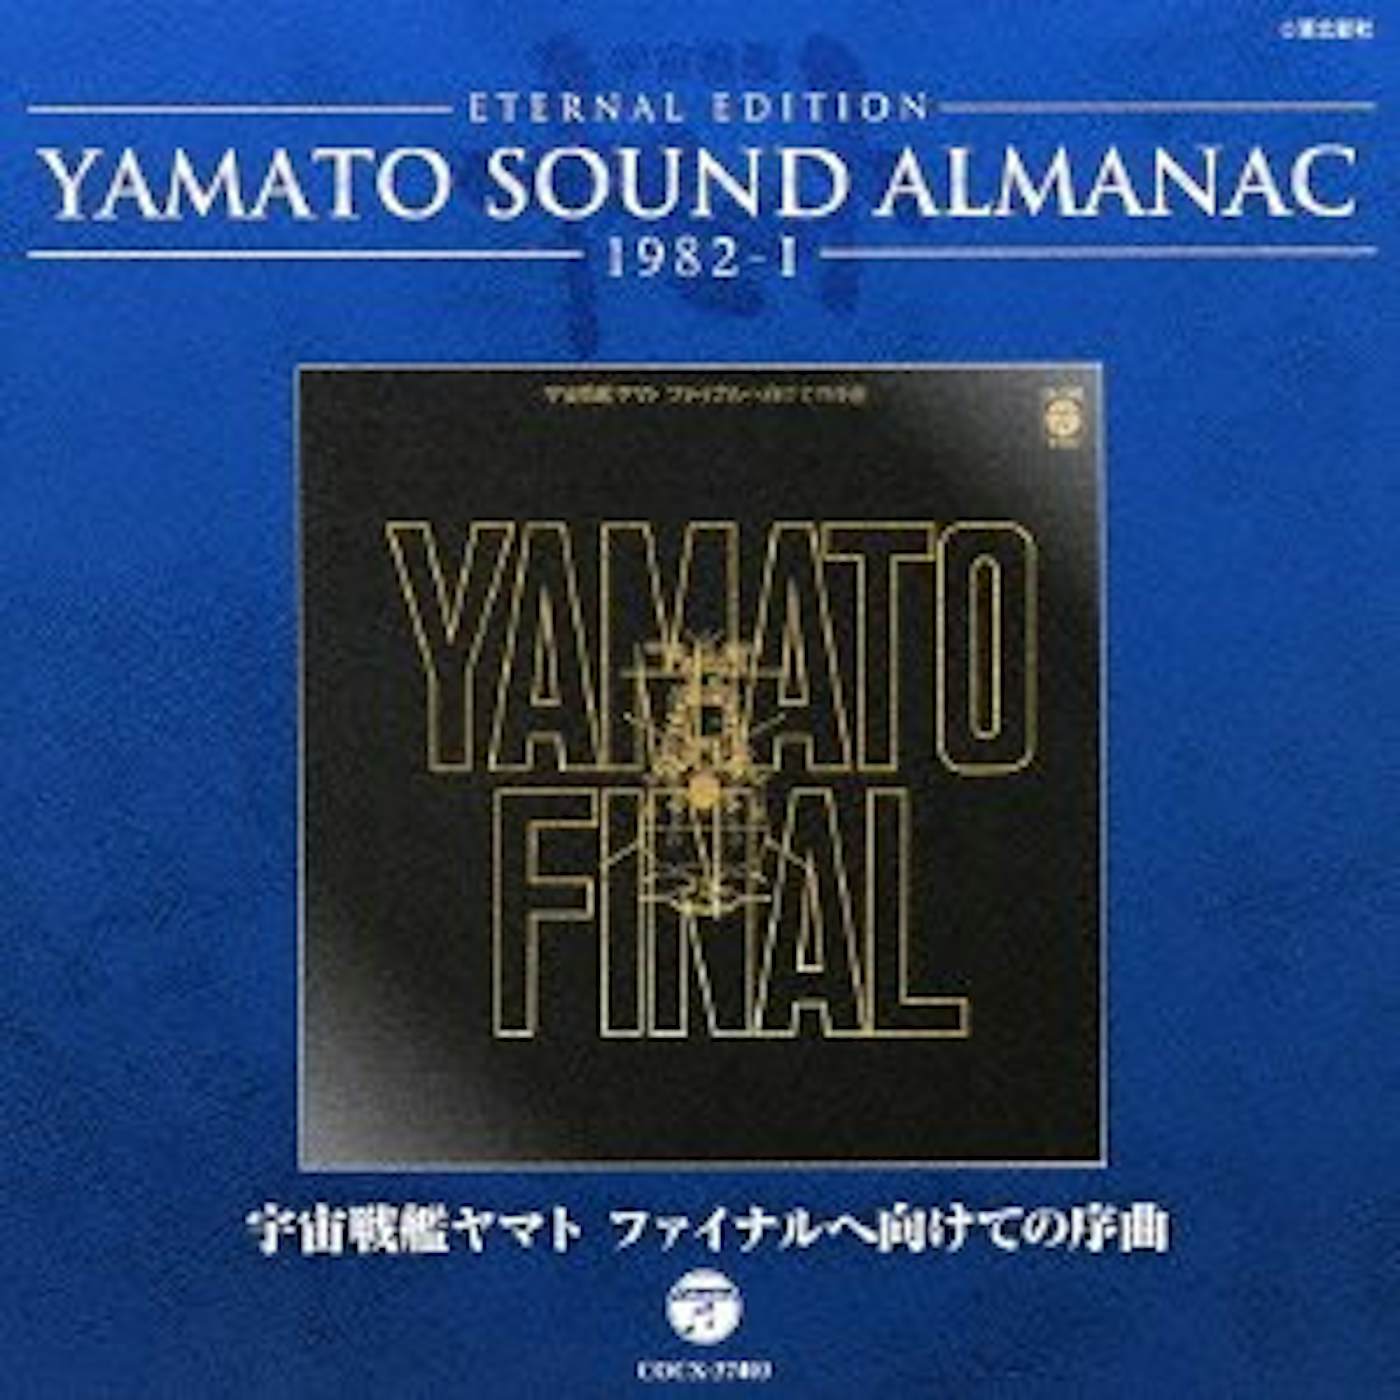 Animation ETERNAL EDITION YAMATO SOUND ALMANAC 1982-1 UCHUU CD